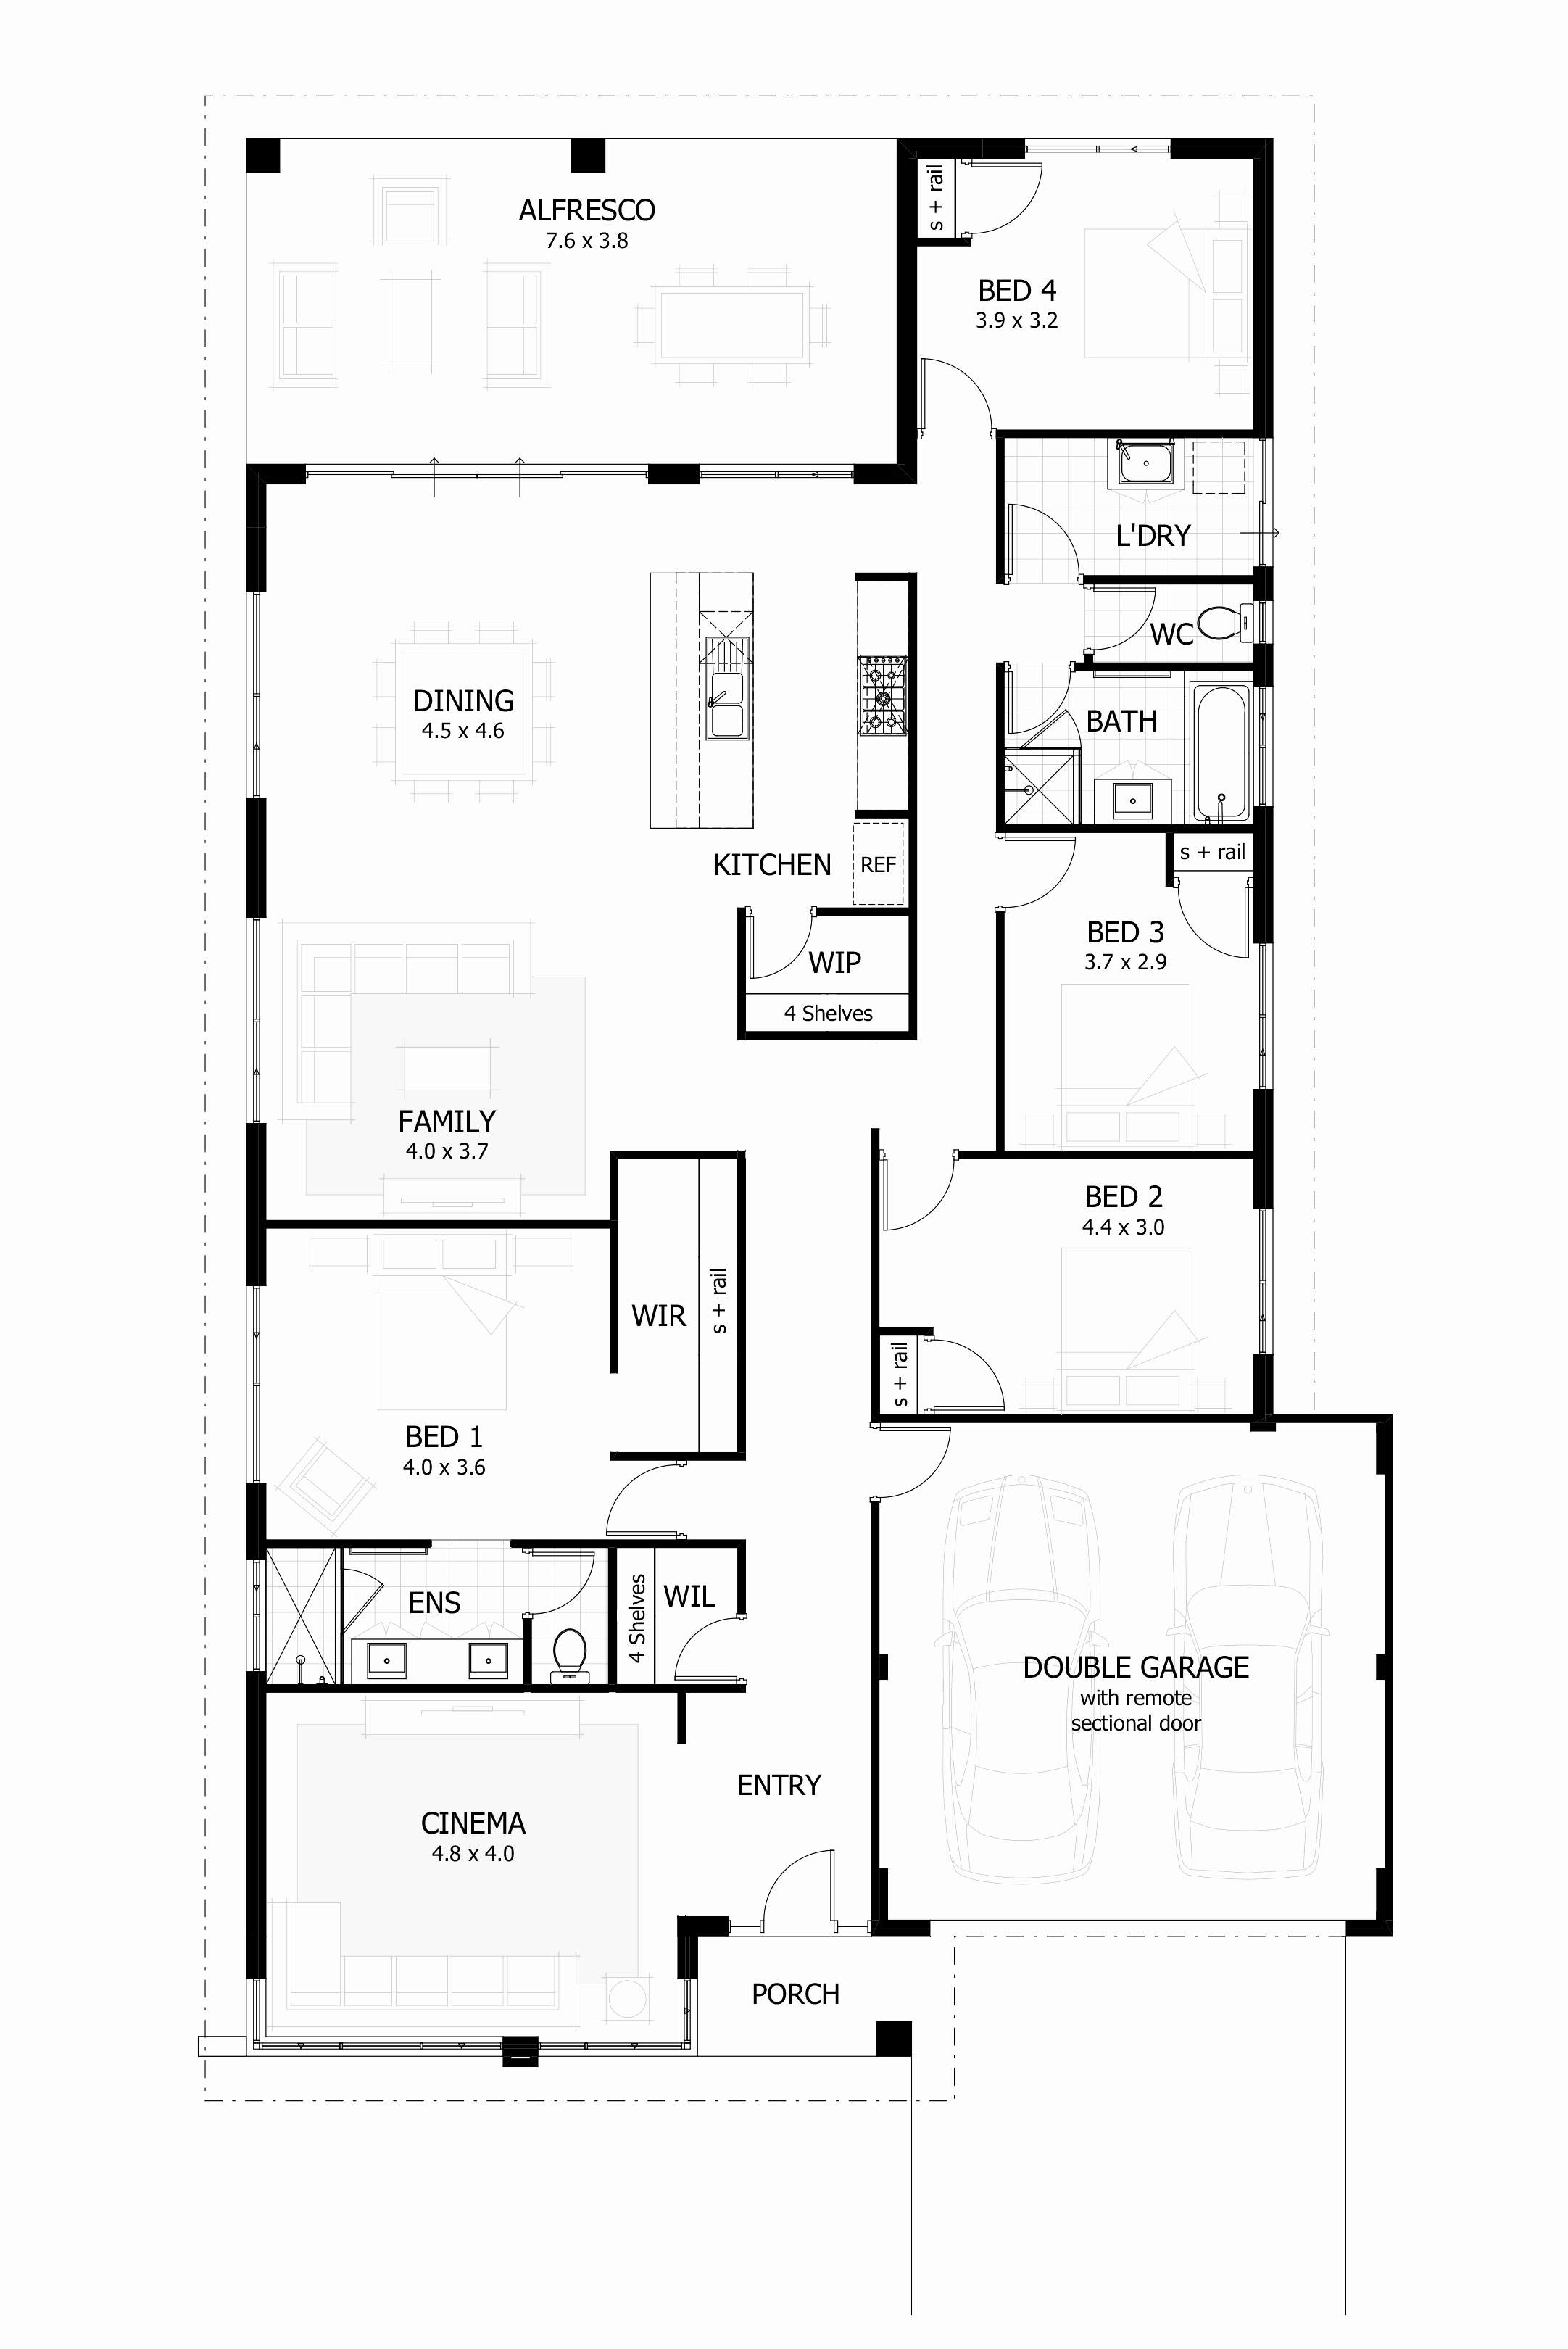 4 bedroom house plans pdf free download >